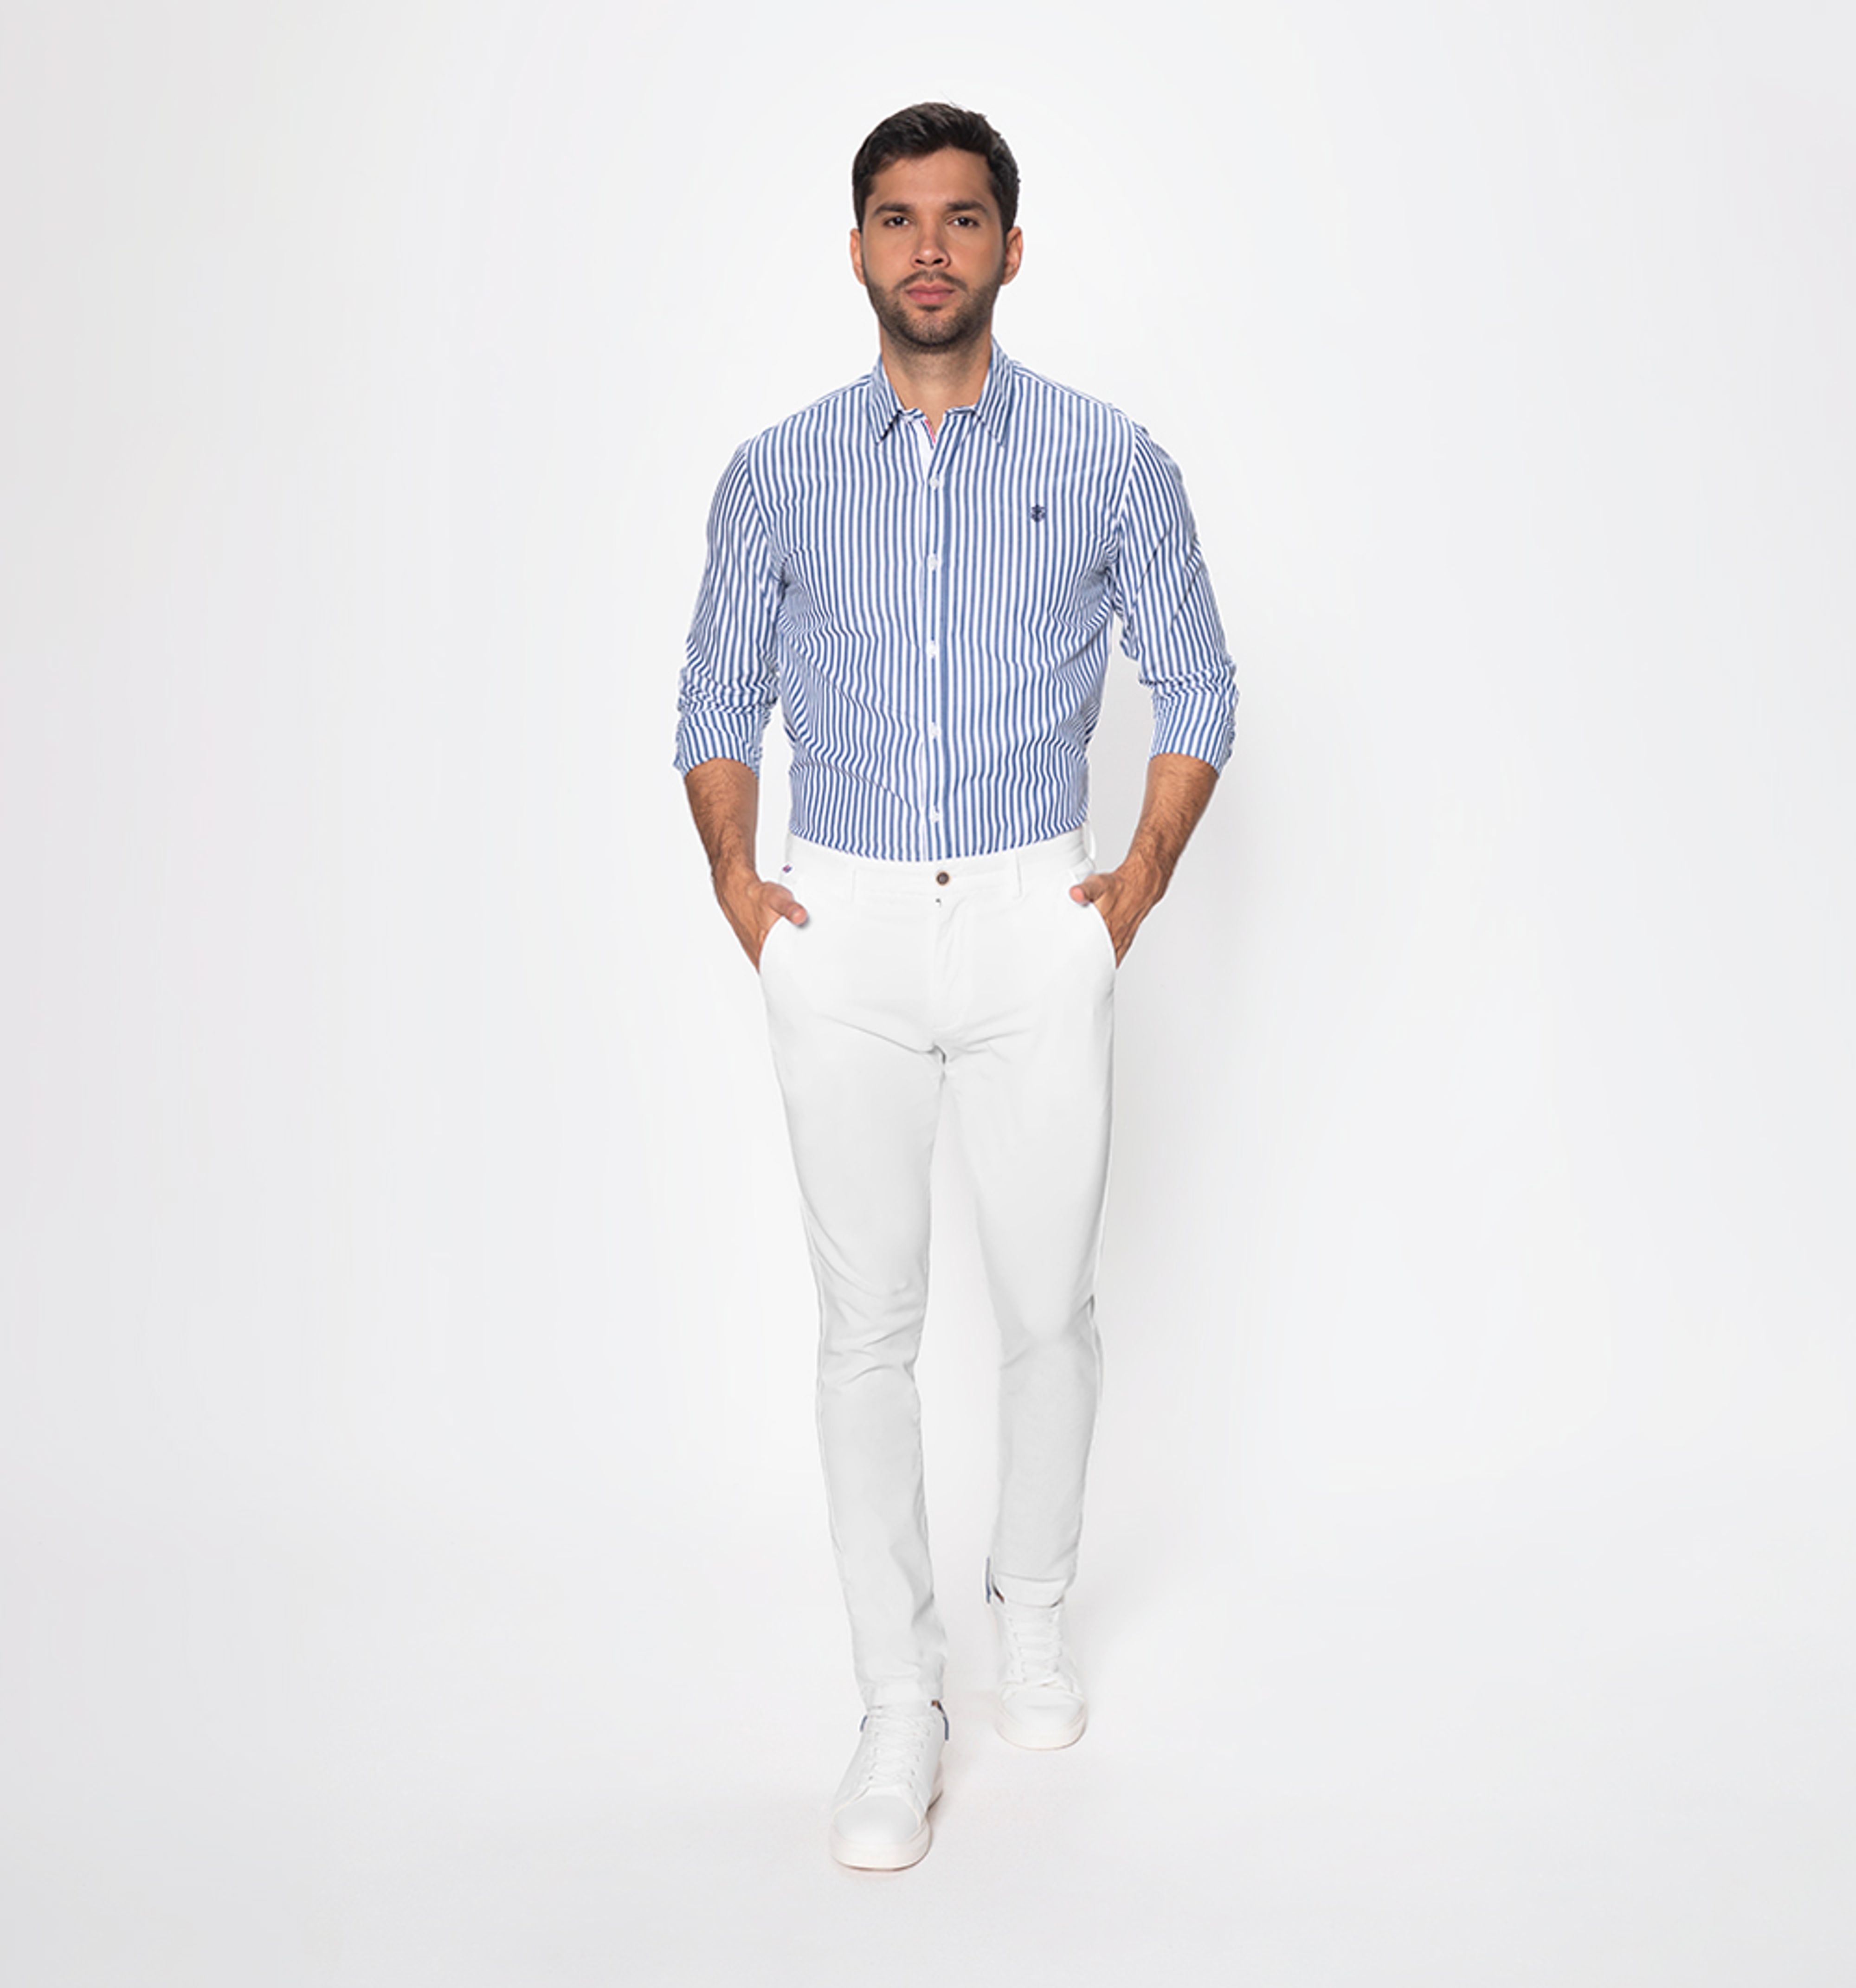 img.kwcdn.com/product/Fancyalgo/VirtualModelMattin, pantalones blancos  hombre 